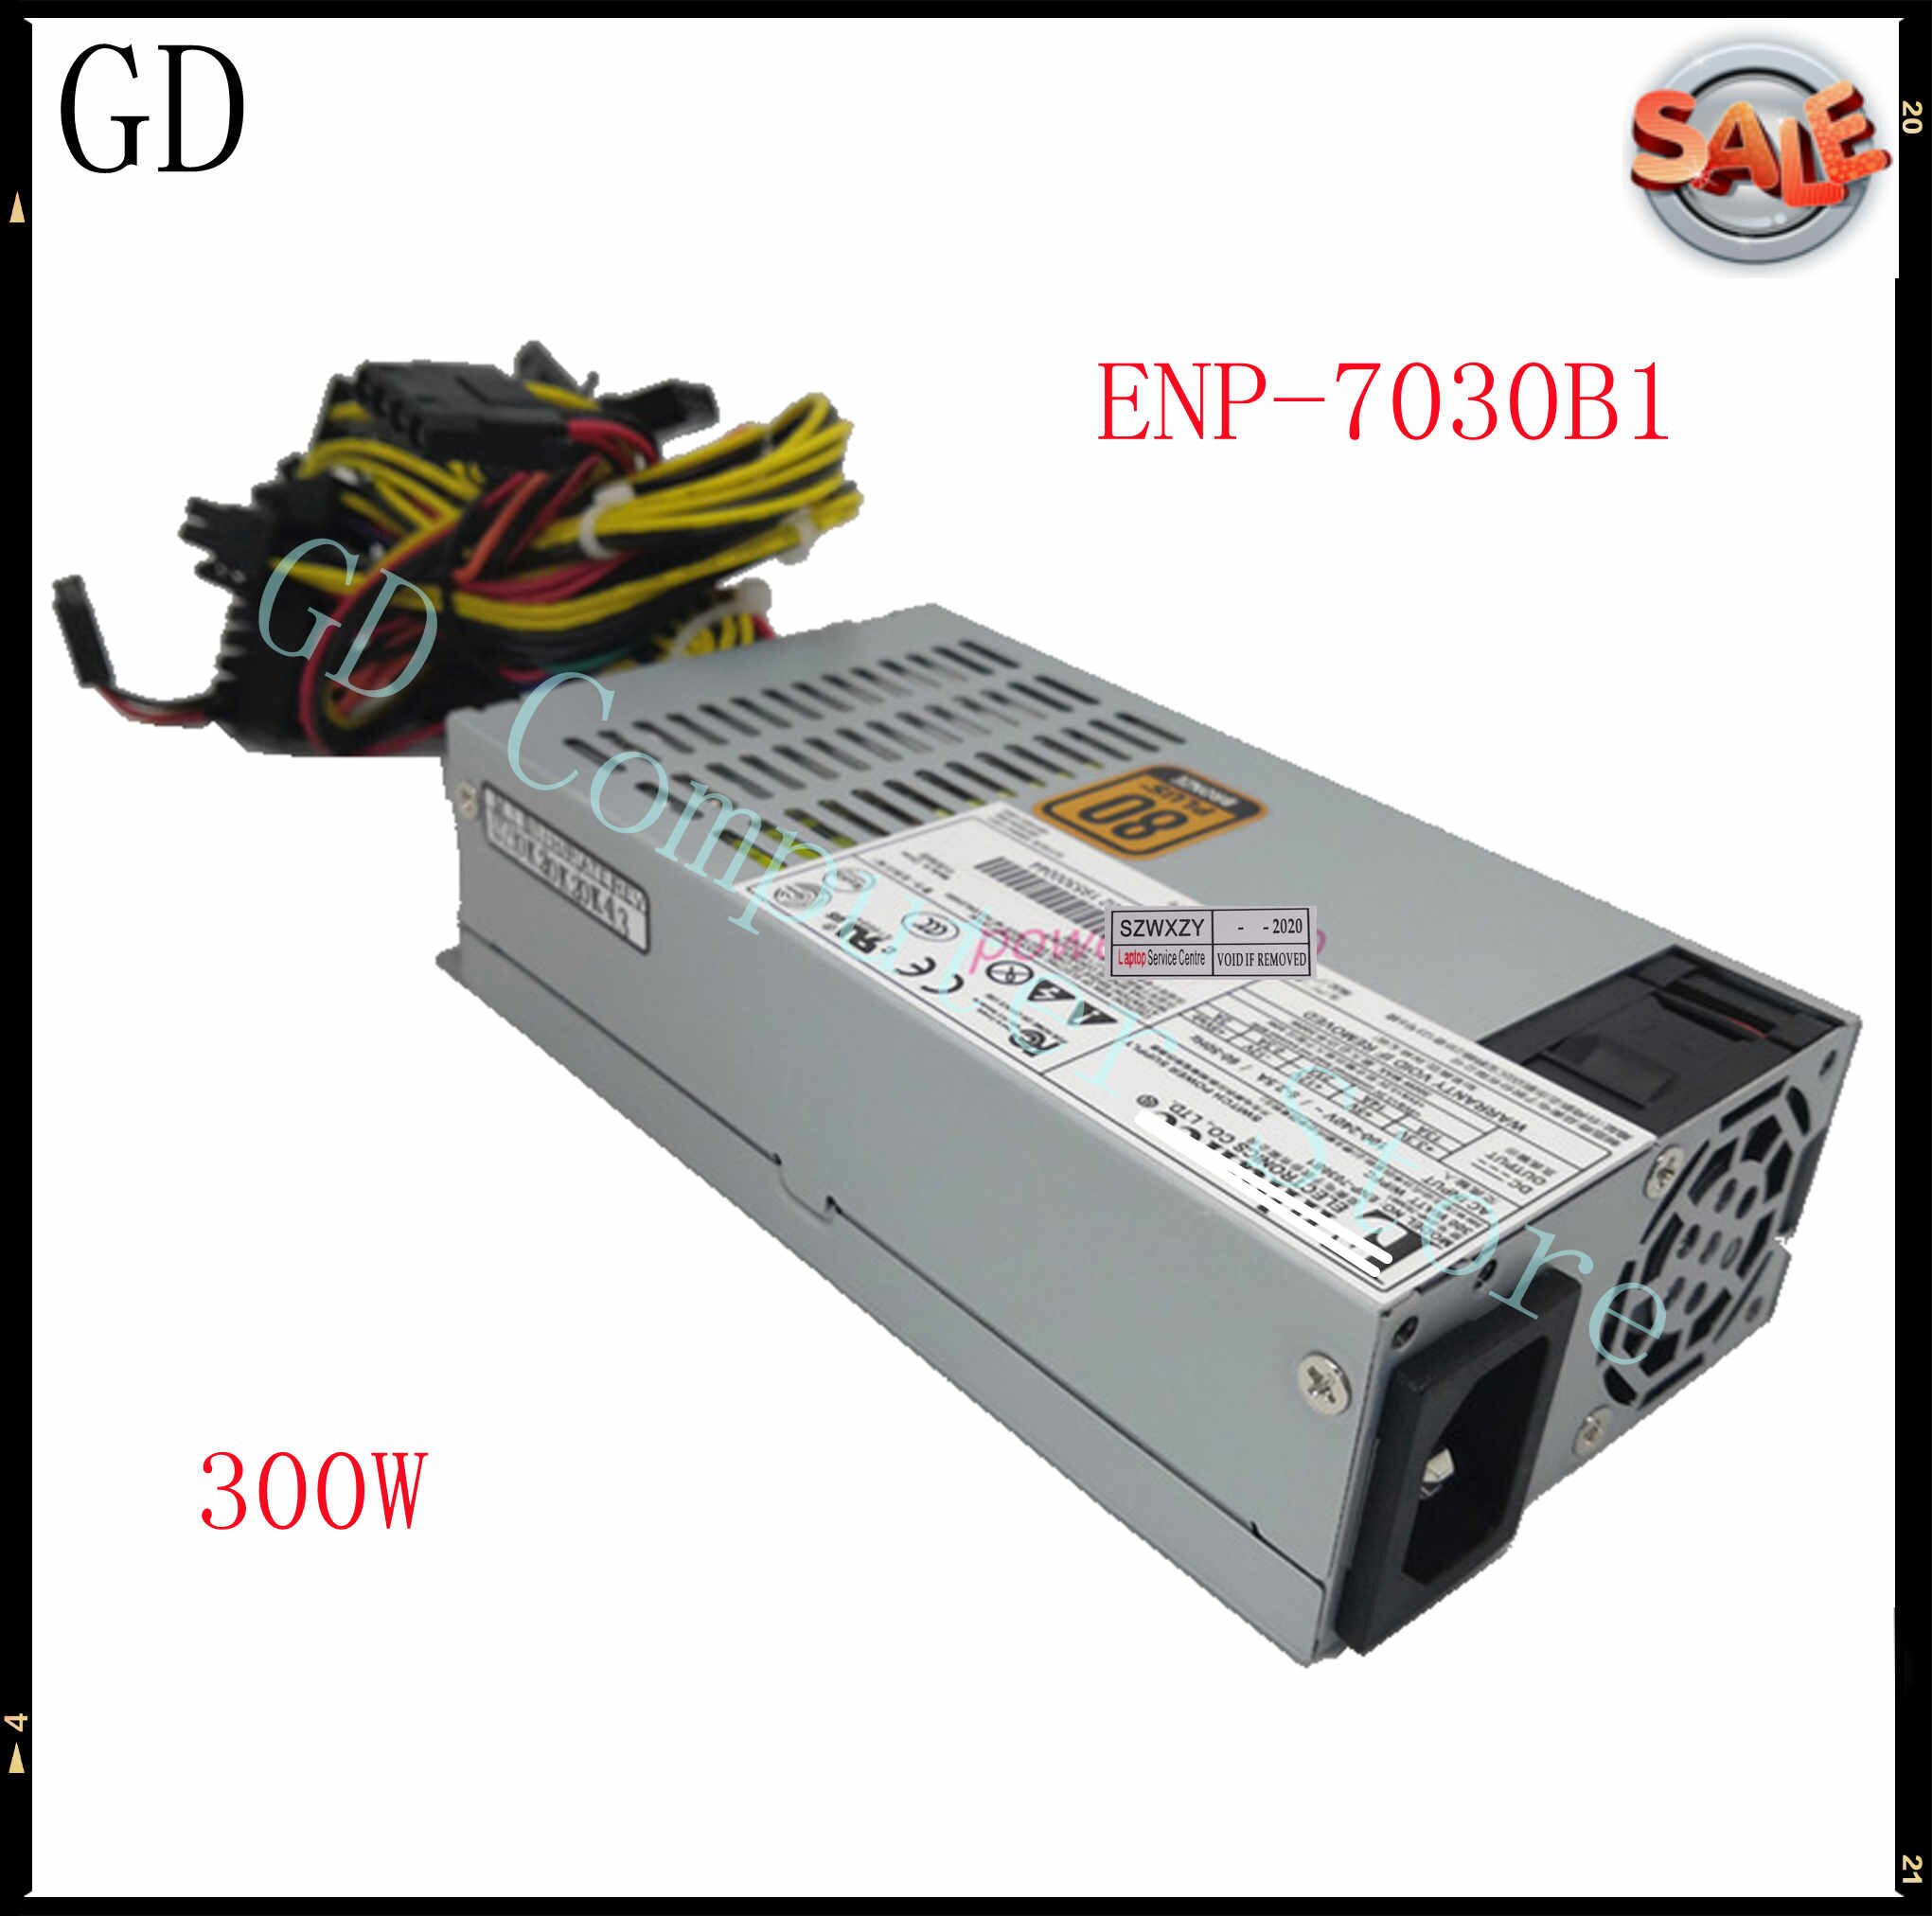 GD 새 원본 서버 전원 공급 장치 향상 ENP-7030B FLEX-ATX ENP-7030B1 300W 전체 테스트 된 빠른 배송